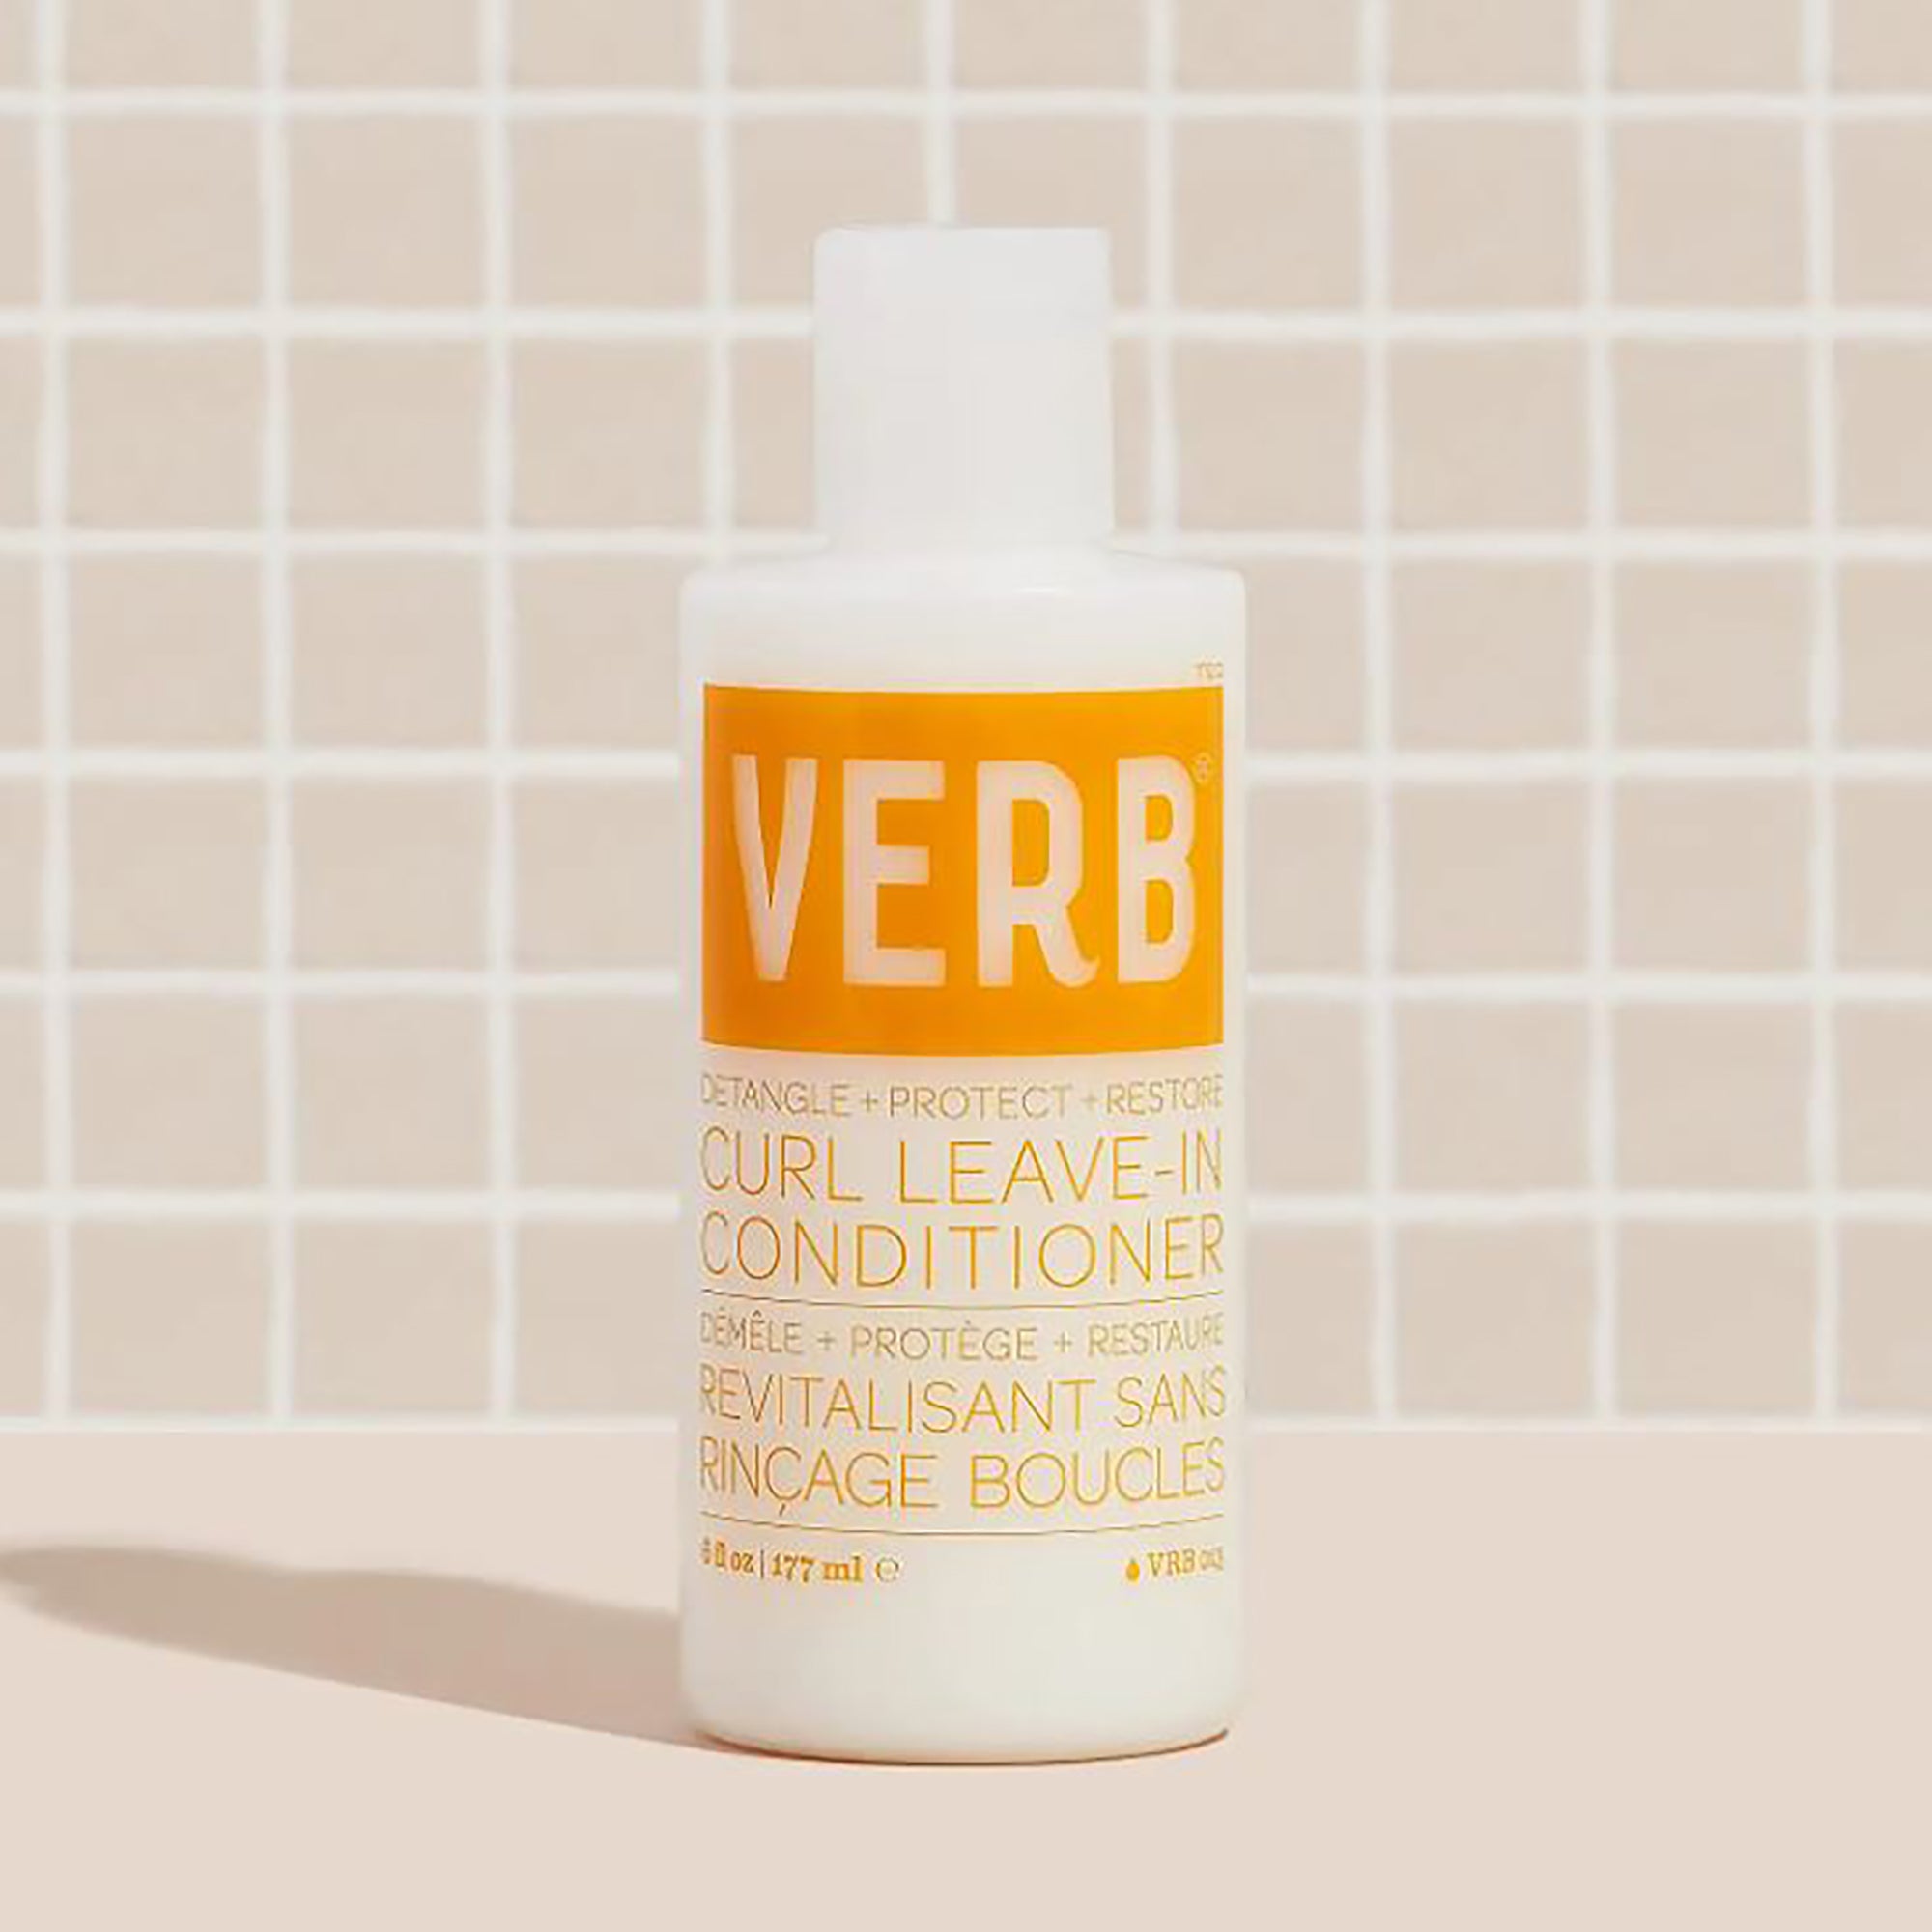 Verb Curl Leave-In Conditioner 6oz / 6OZ